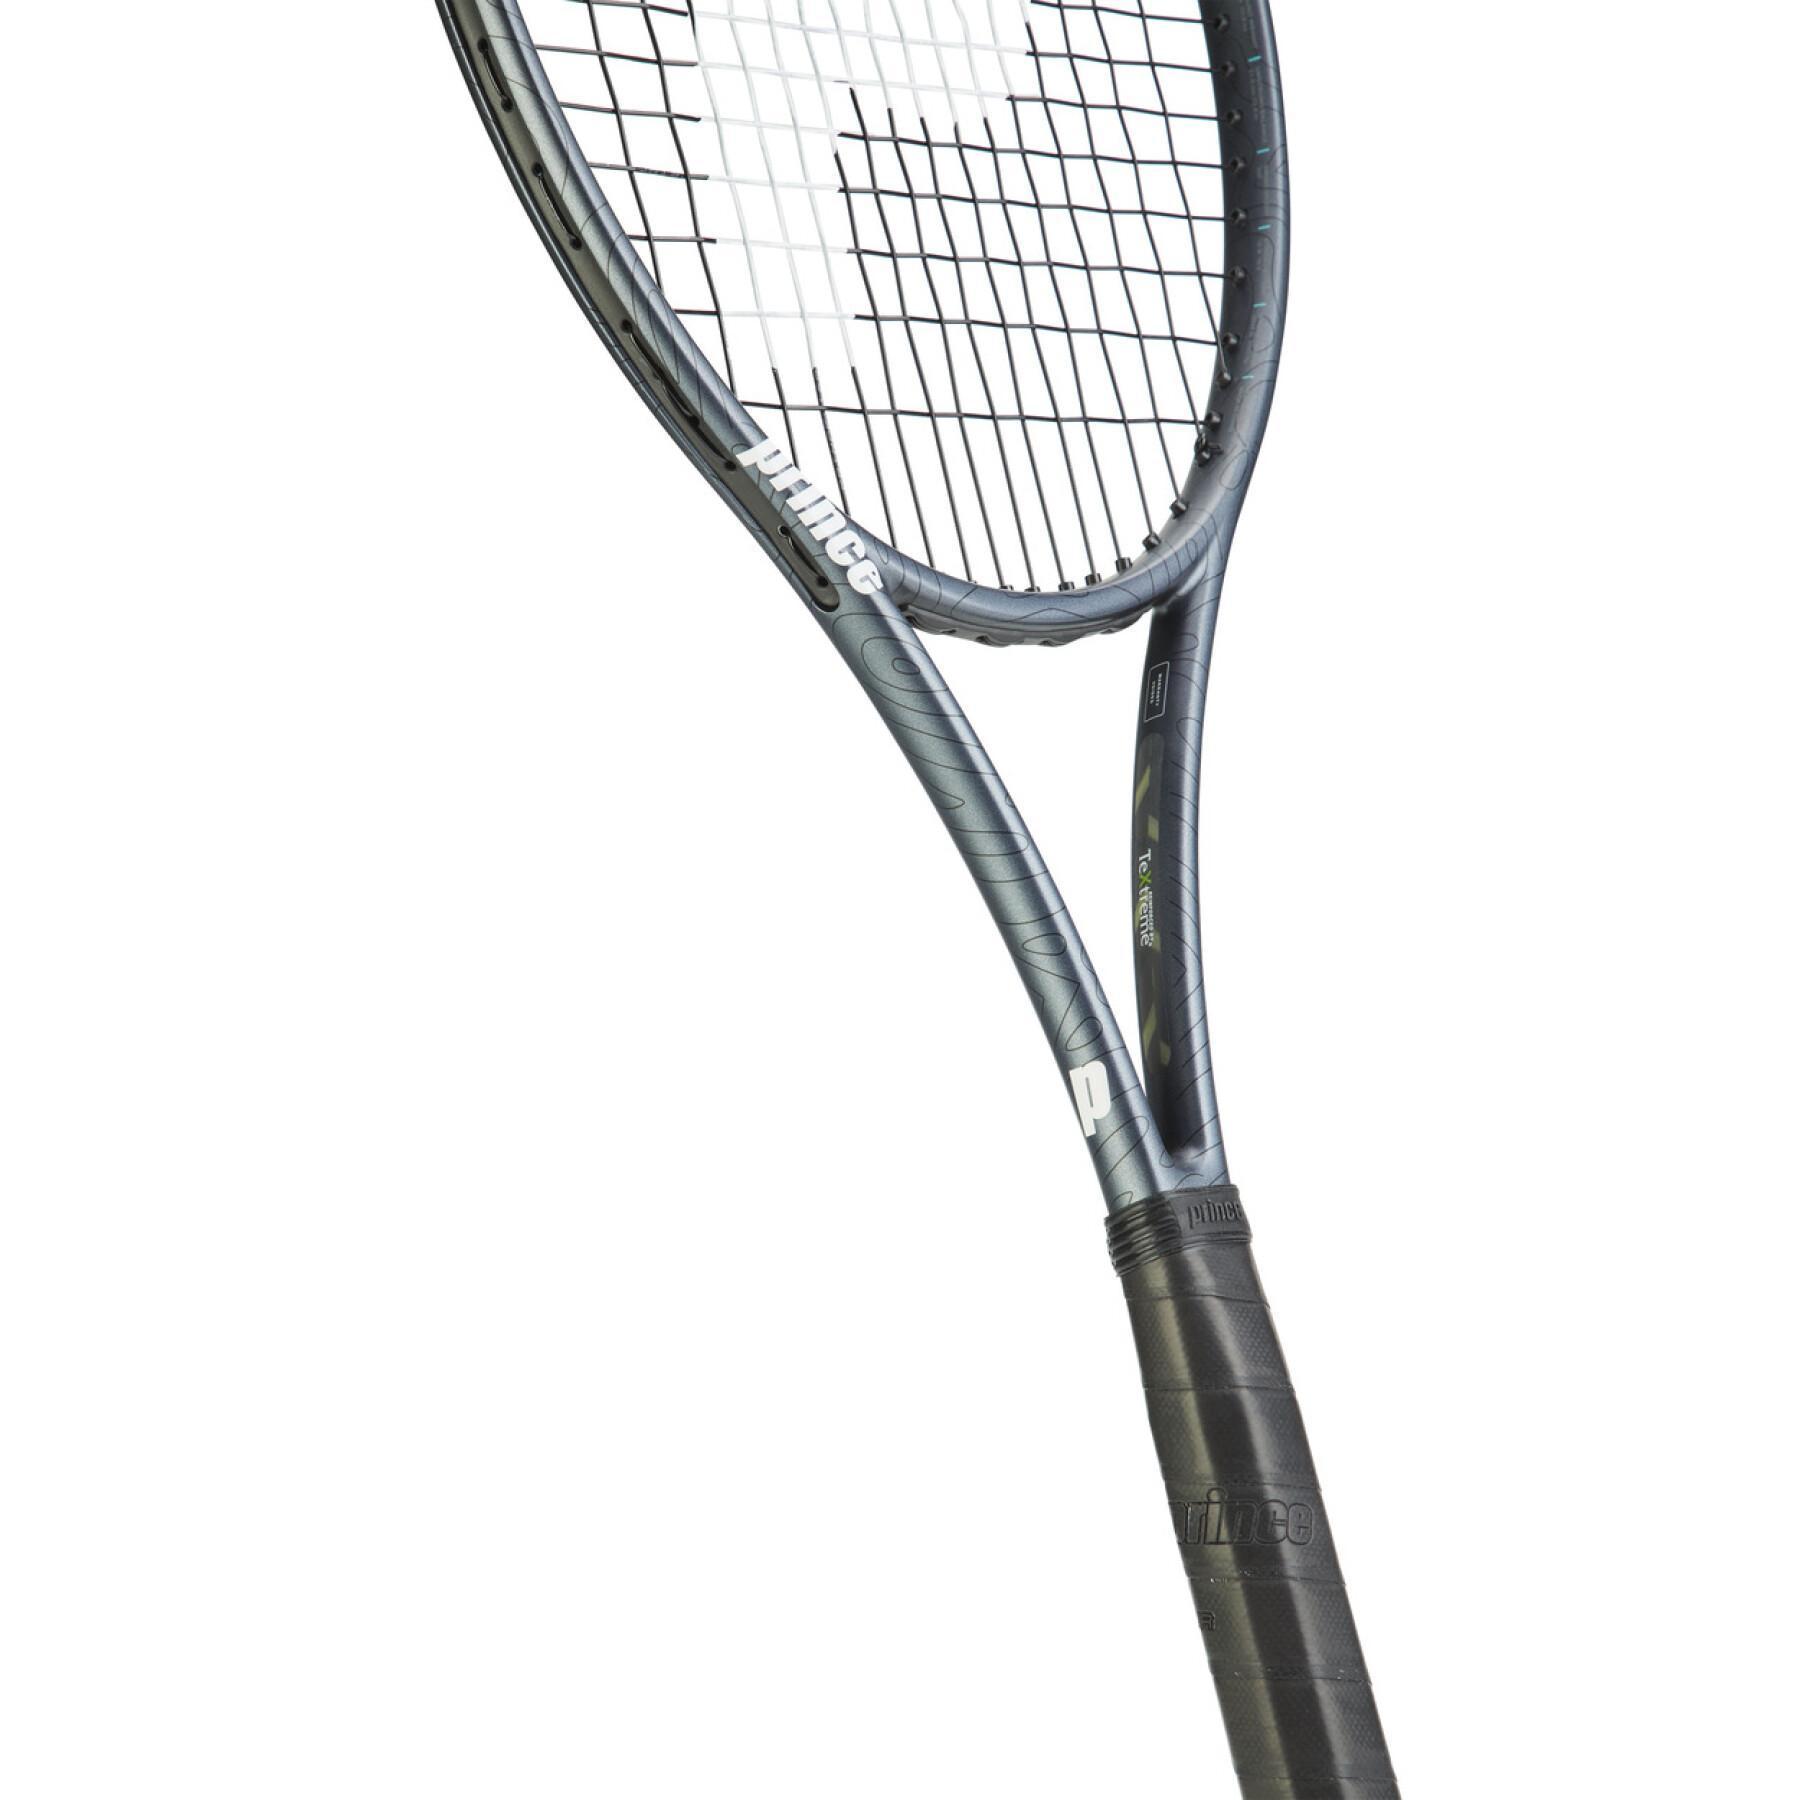 Tennis racket Prince phantom 100x (305gr)